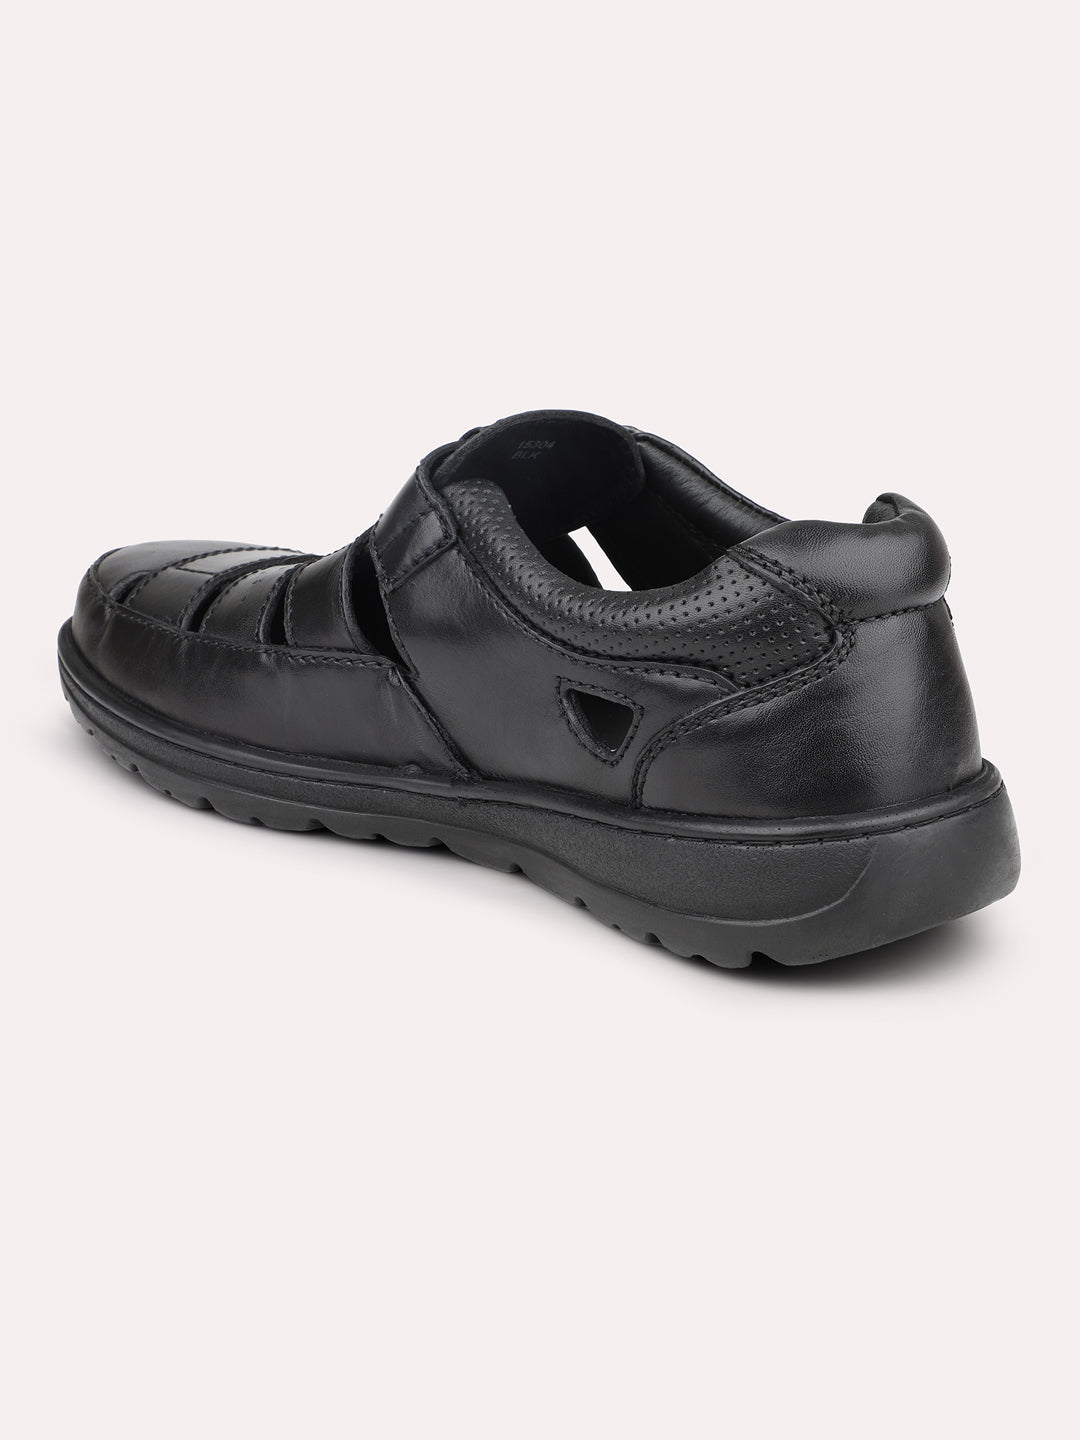 Atesber Black Striped Casual Sandal For Men's